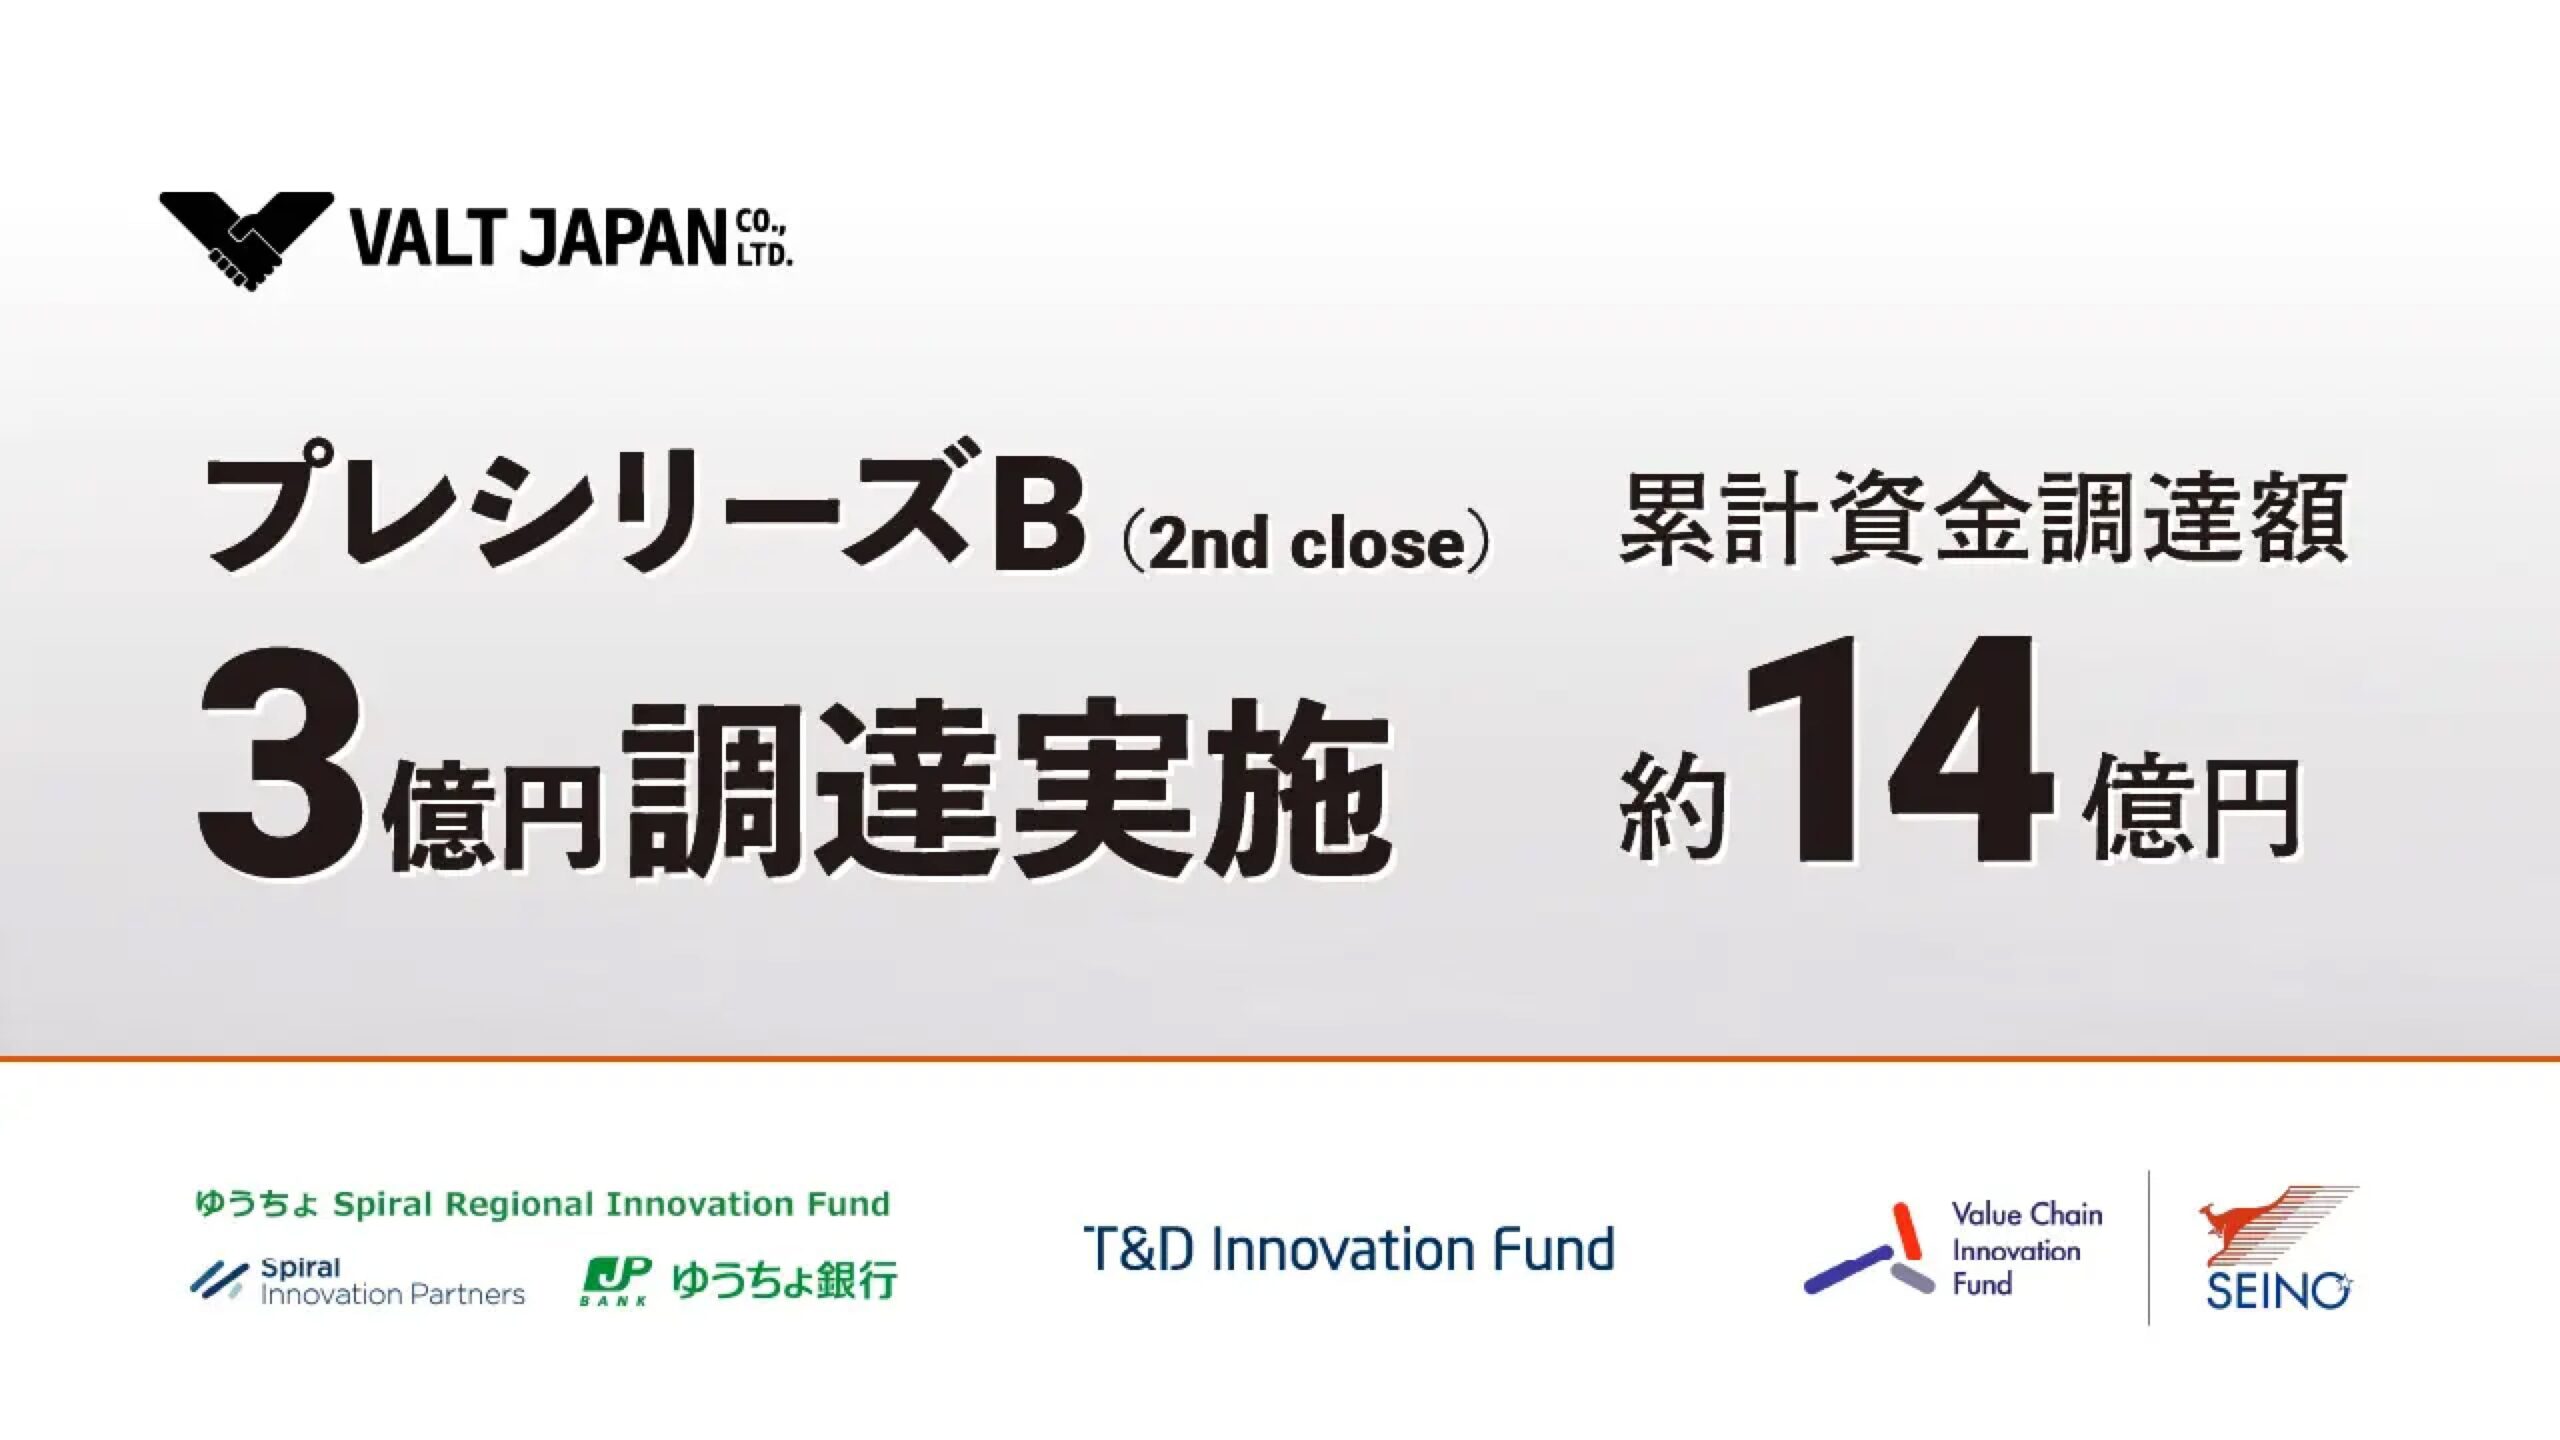 VALT JAPAN株式会社、プレシリーズB2ndラウンドにて3億円の資金調達が決定ー累積調達額は約14億円に